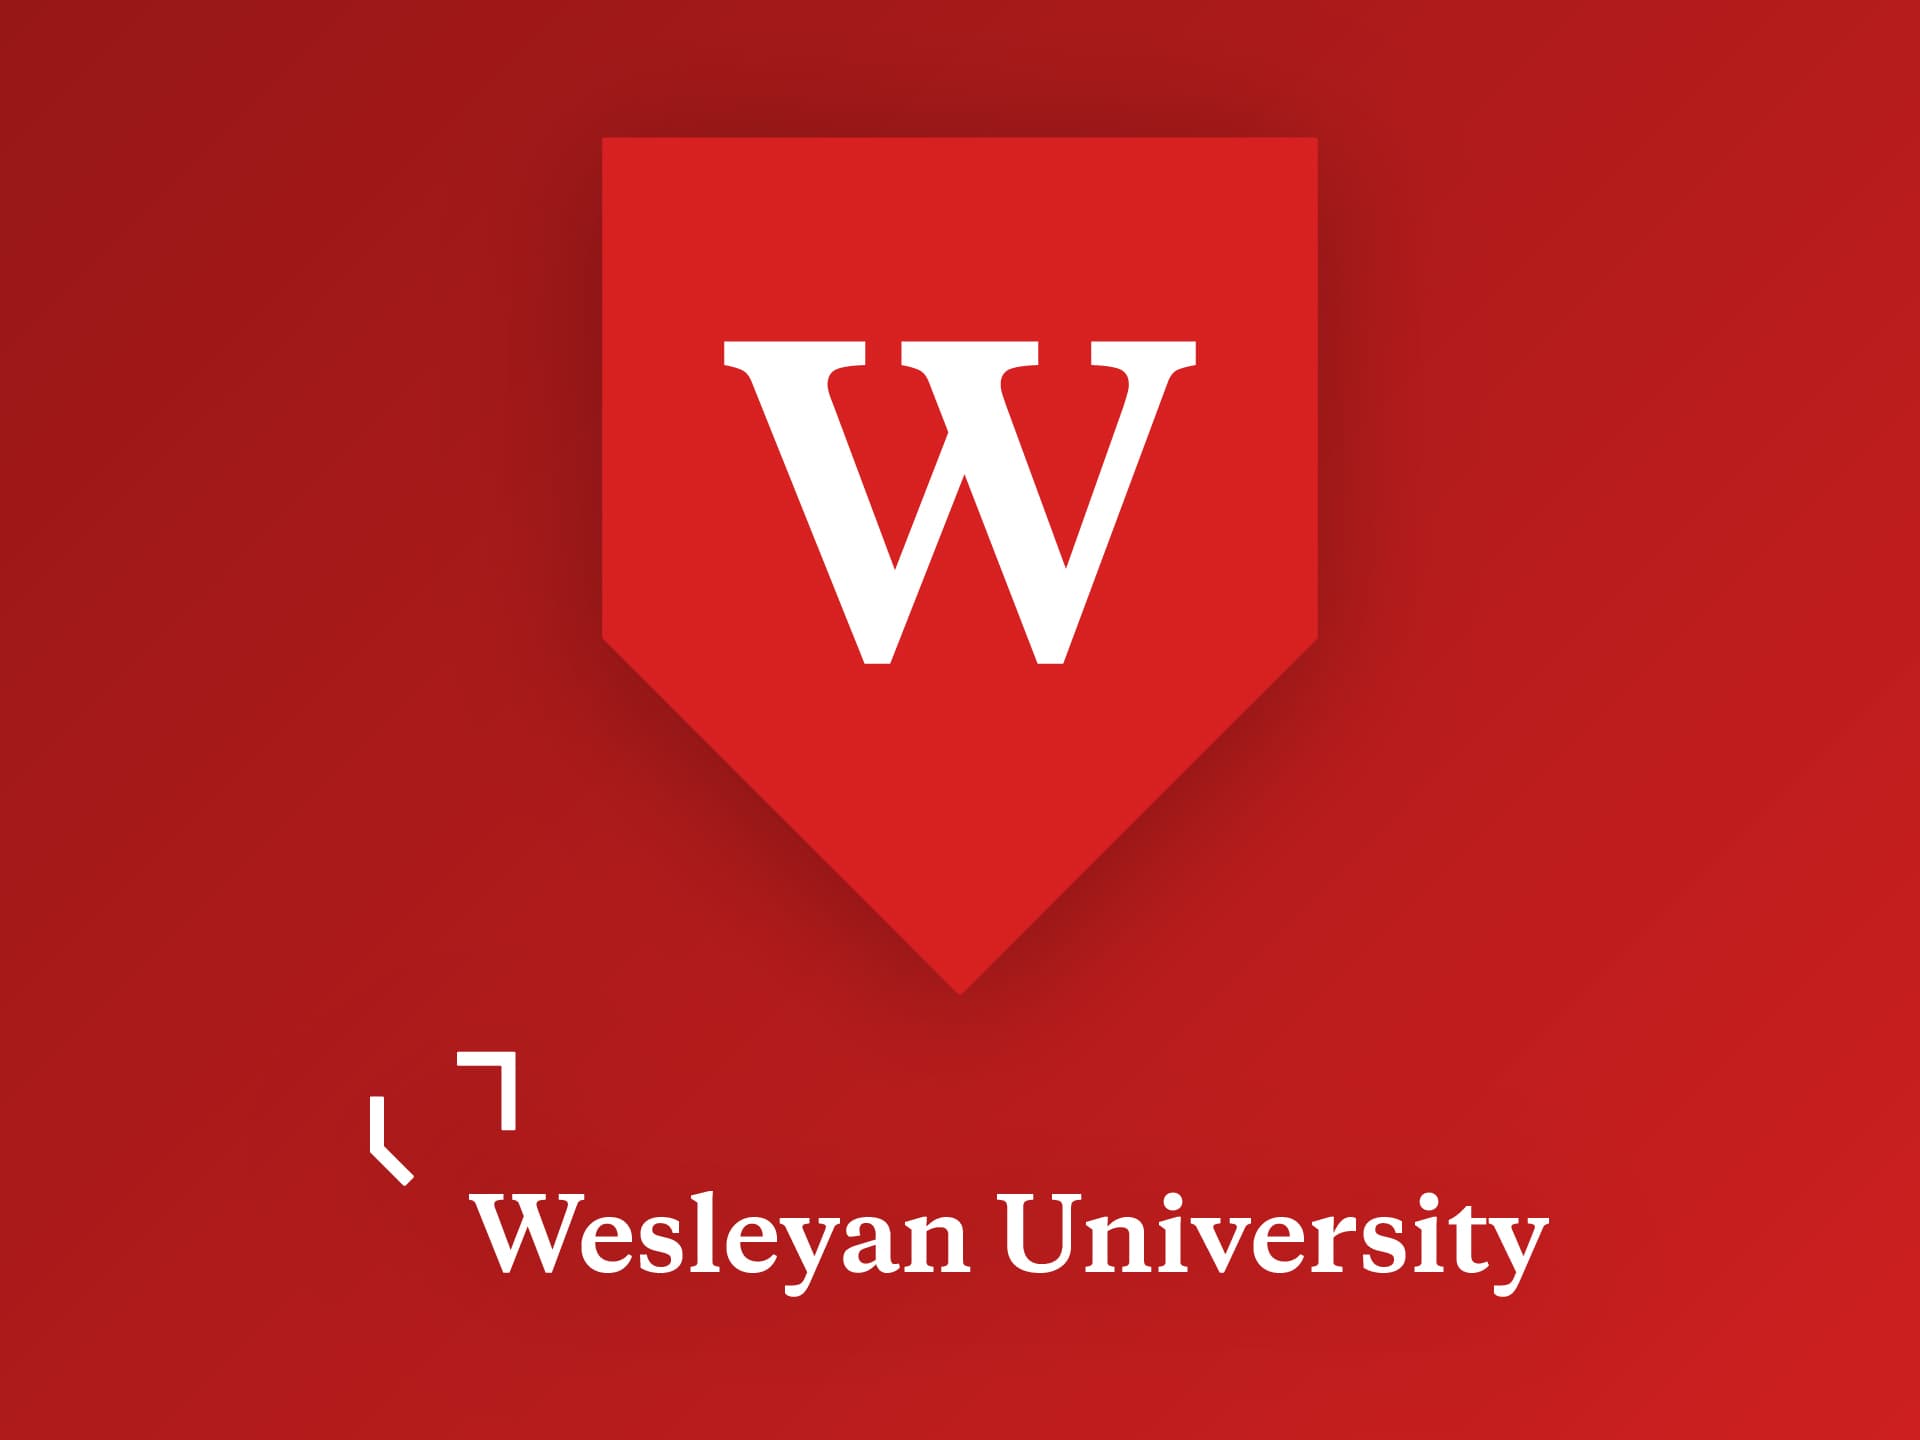 Monogram for Wesleyan University